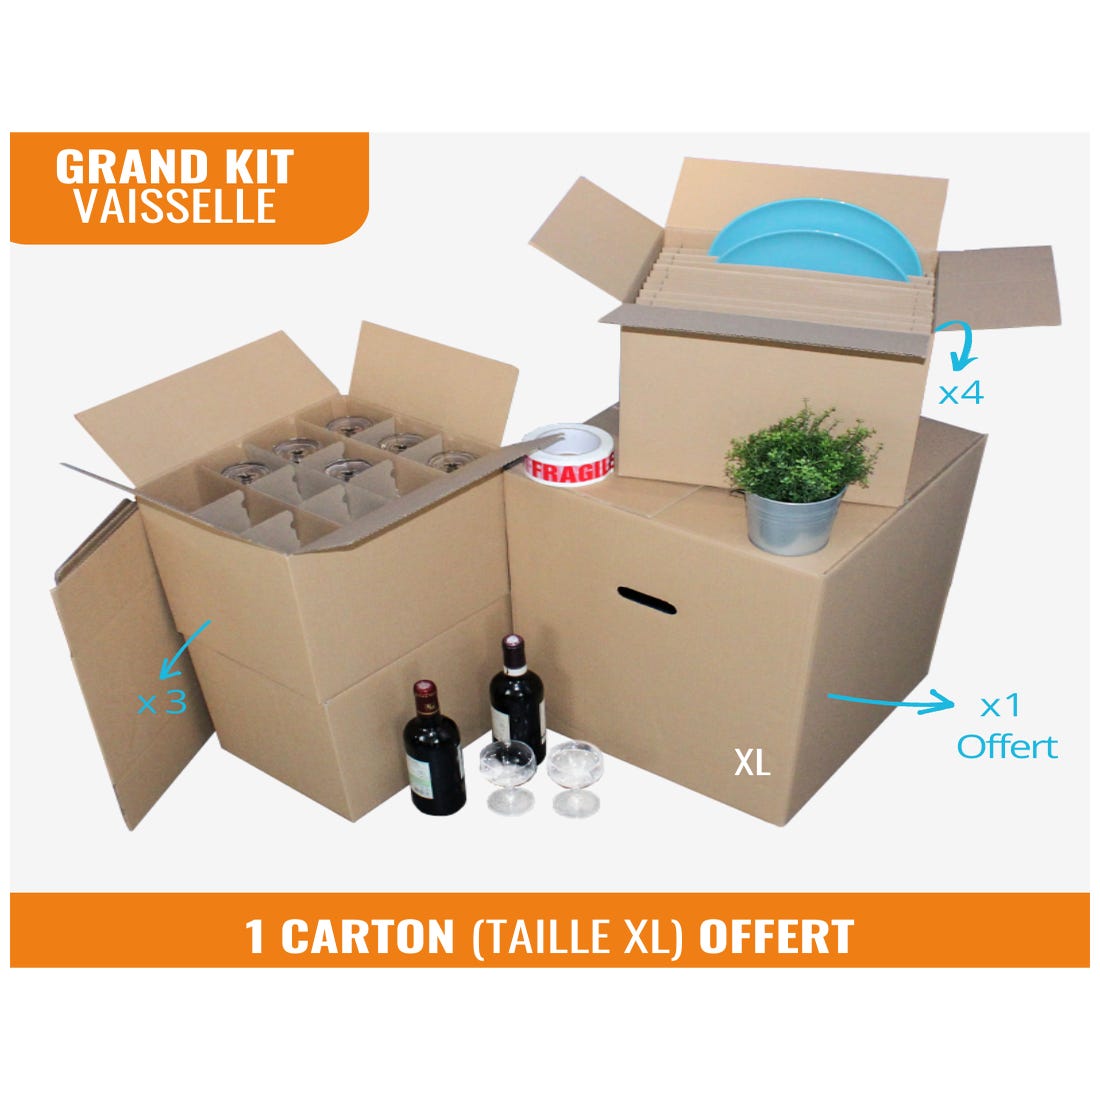 Grand kit déménagement vaisselle : 1 cartons XL + 3 cartons 24 verres + 4  cartons 12 assiettes + 1 adhésif fragile